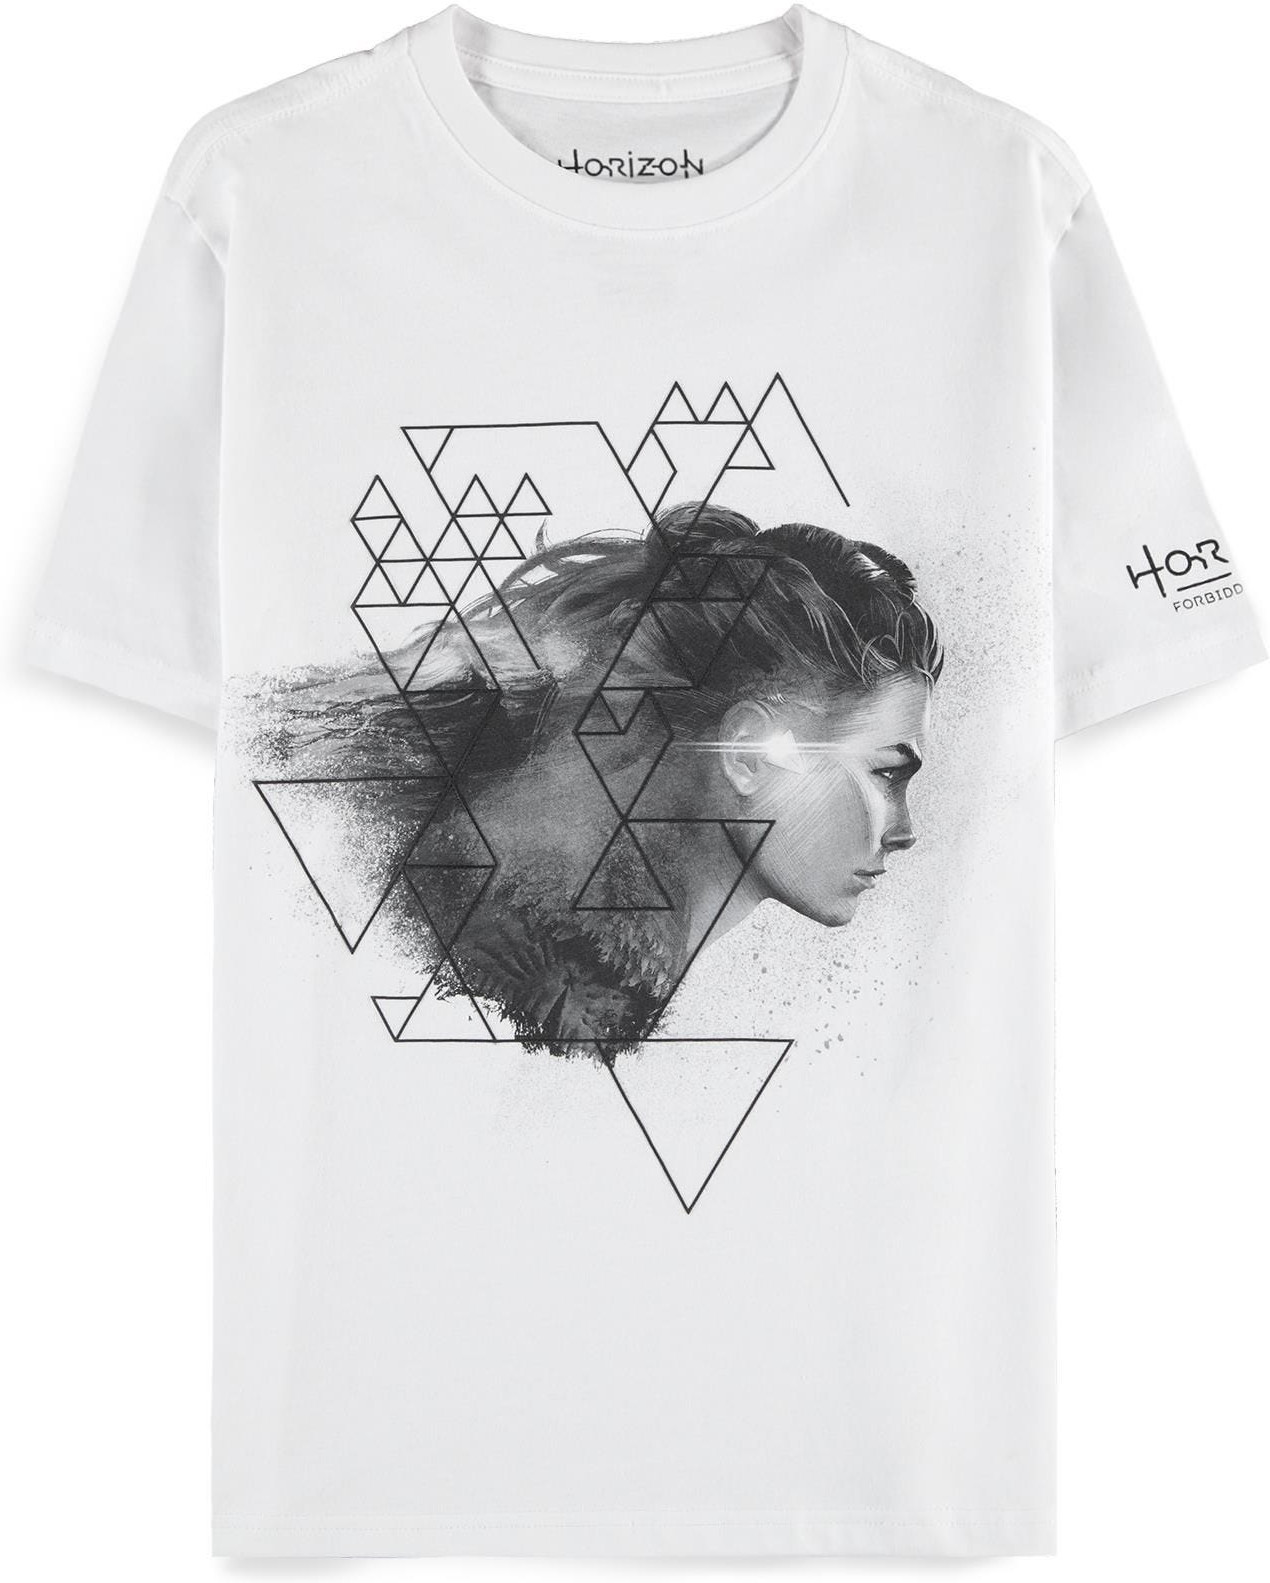 Difuzed Horizon Forbidden West - Aloy - Women's Short Sleeved T-shirt